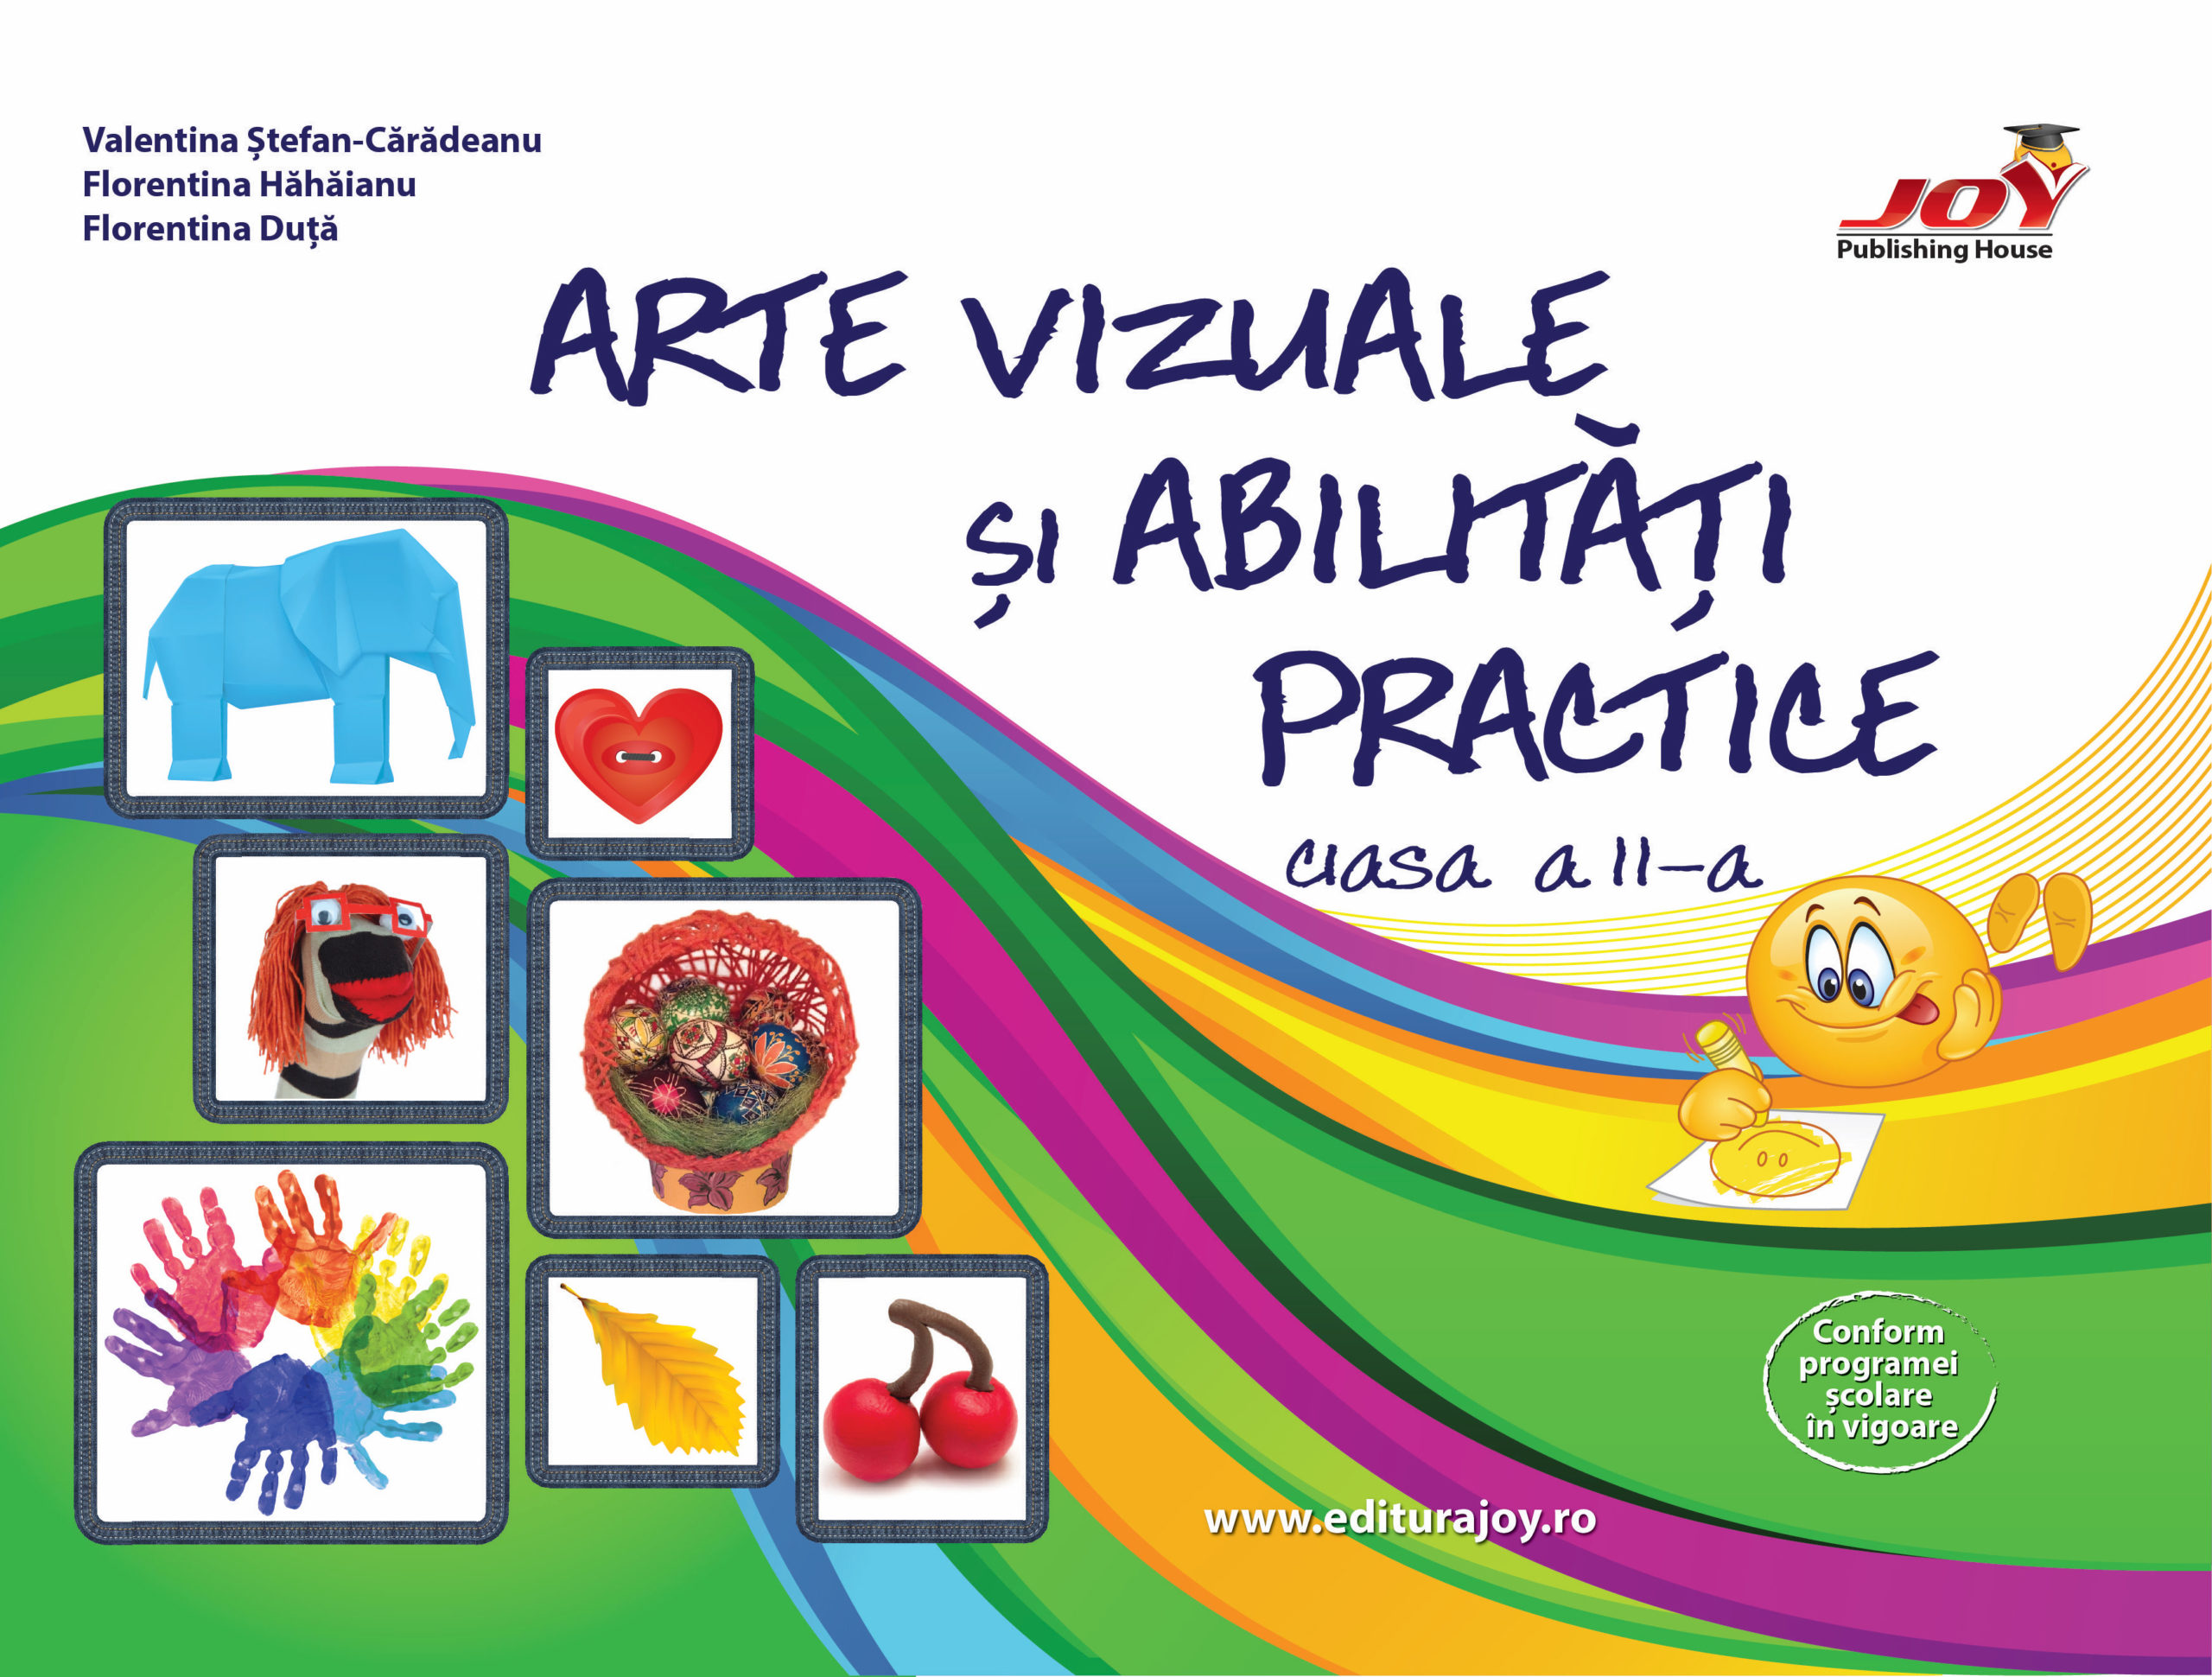 Arte vizuale si abilitati practice - clasa a II-a | Valentina Stefan Caradeanu, Florentina Hahaianu, Florentina Duta